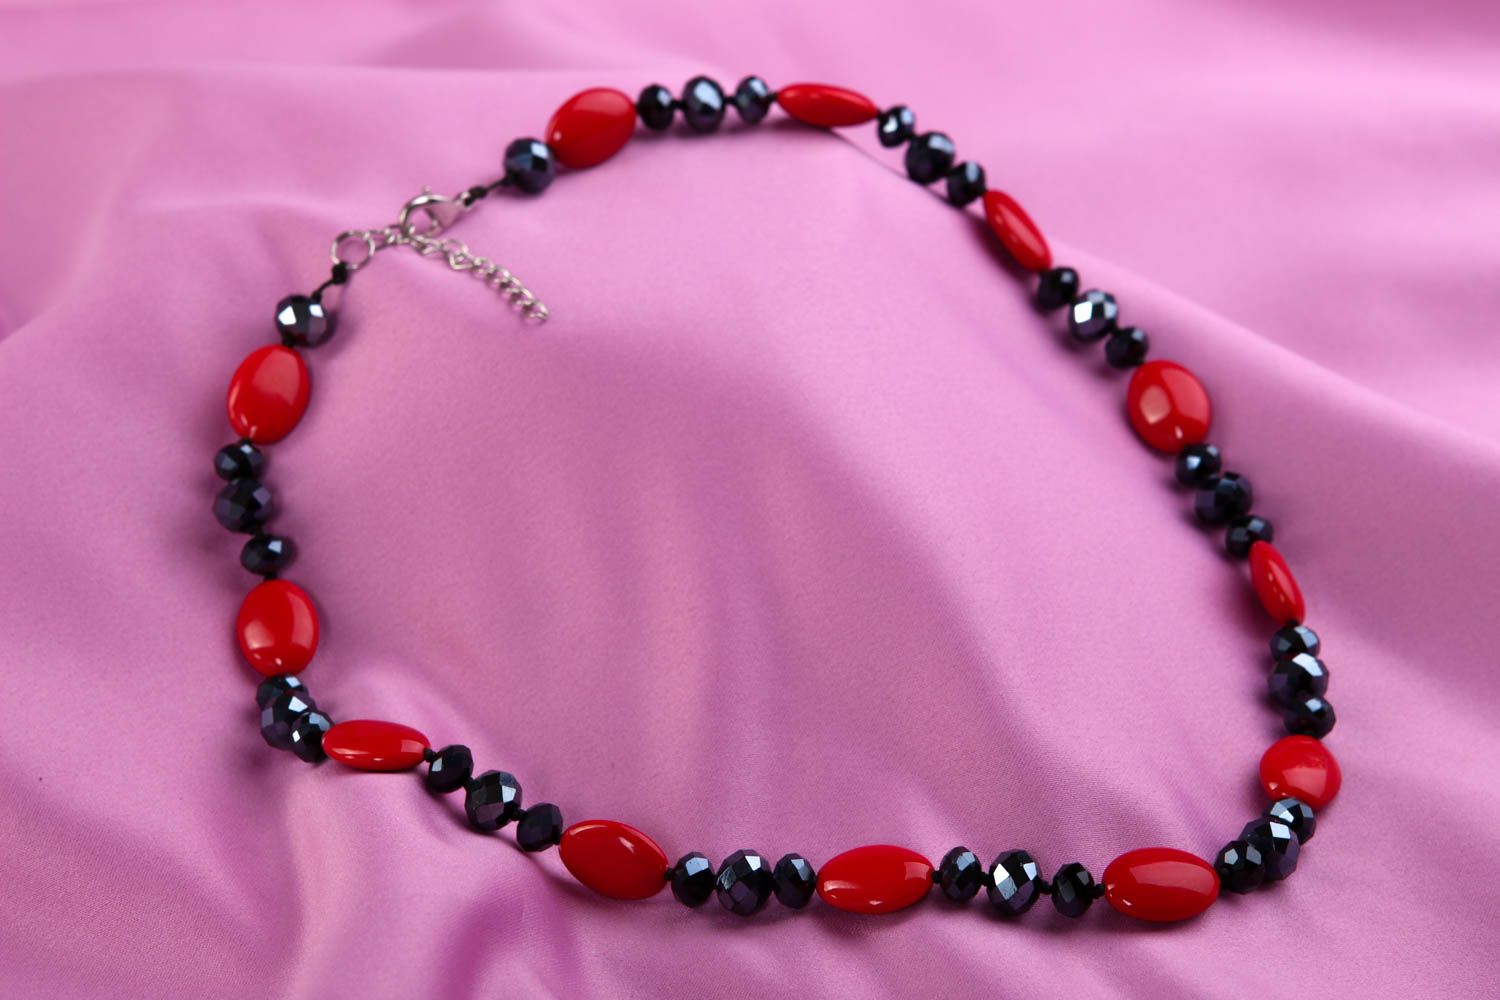 Handmade necklace stone jewelry unusual bead necklace bead accessory gift ideas photo 1